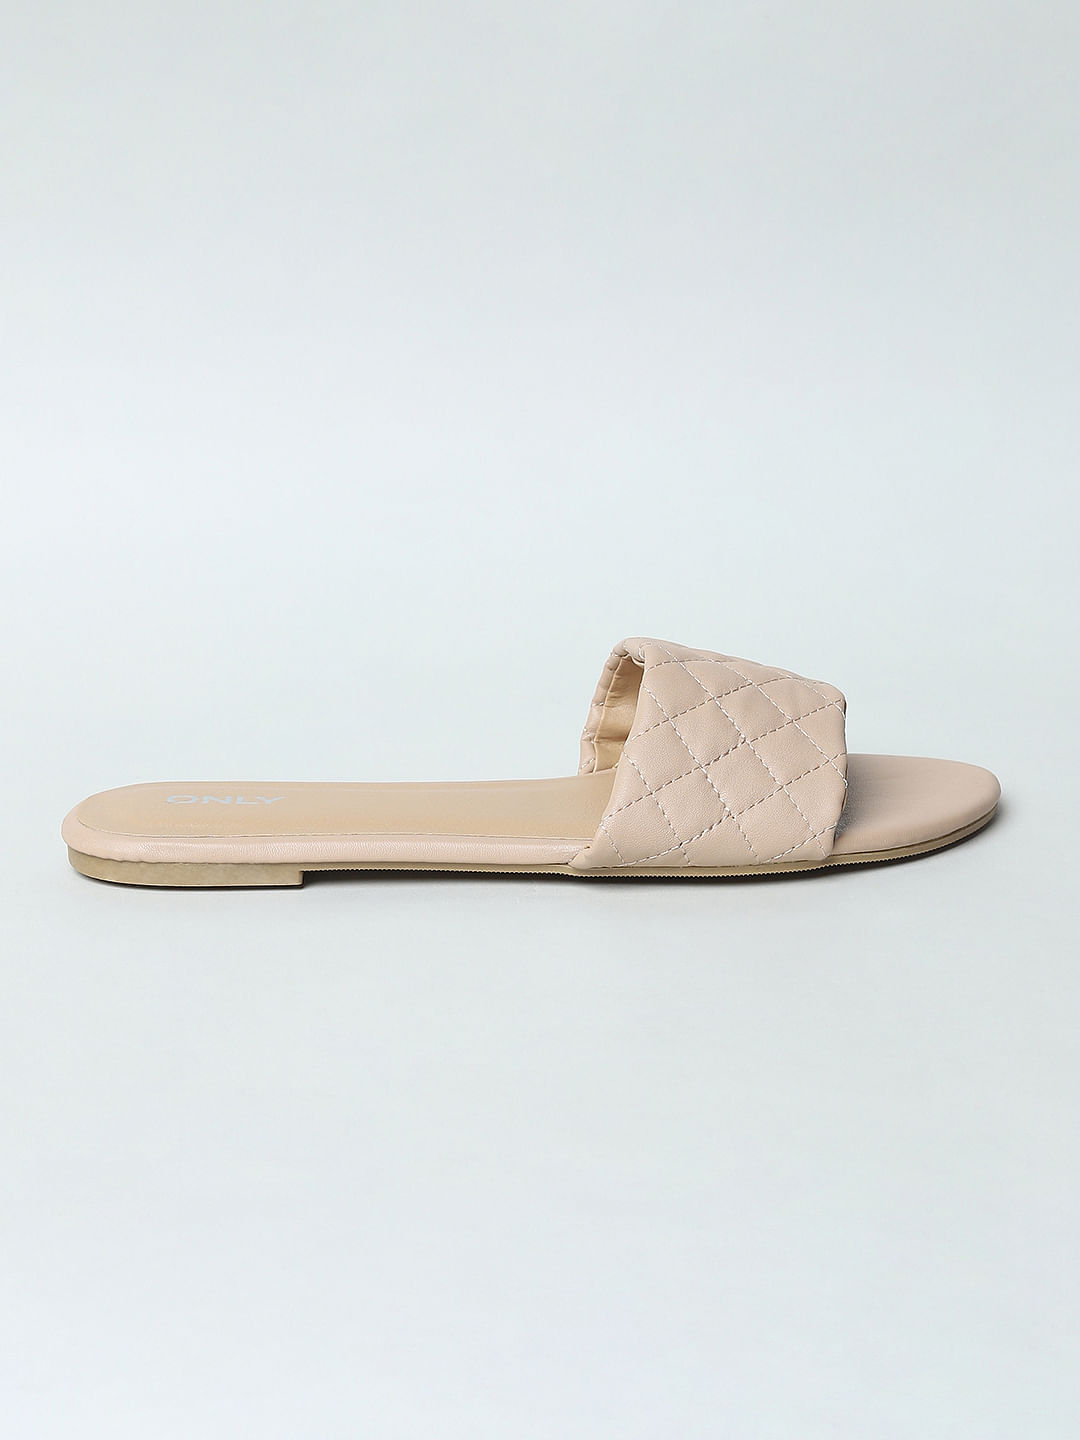 Bottega Veneta Padded leather sandals | MILANSTYLE.COM